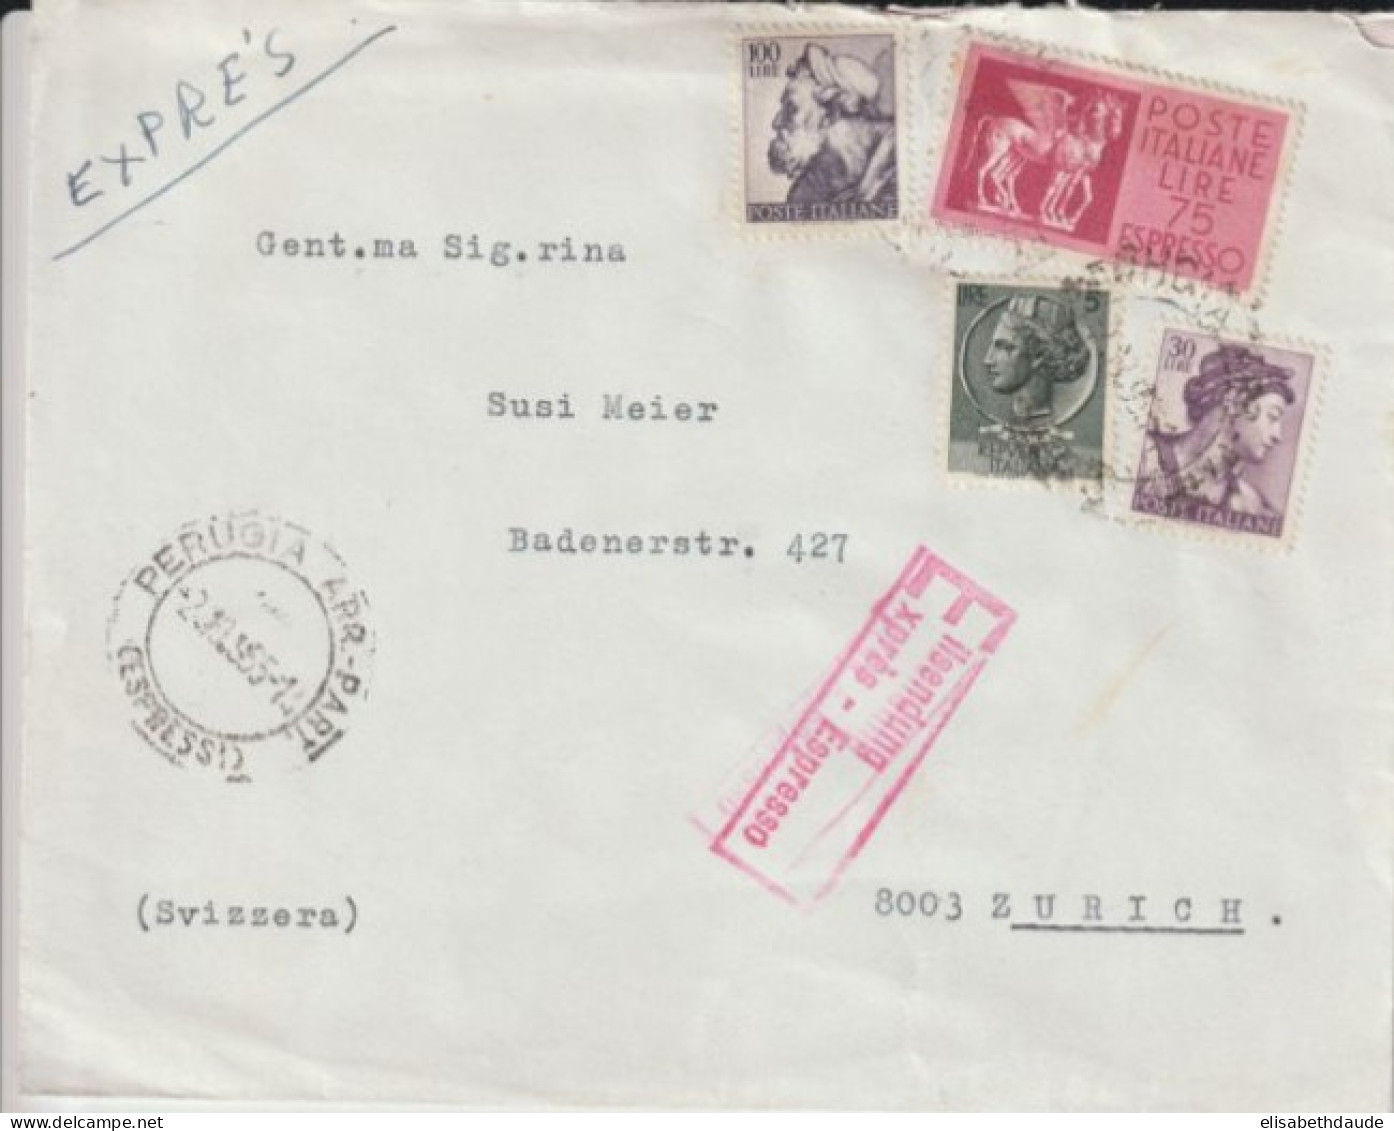 ITALIE - 1965 - ENVELOPPE EXPRES ! De PERUGIA  => ZÜRICH (SUISSE) - Express/pneumatic Mail